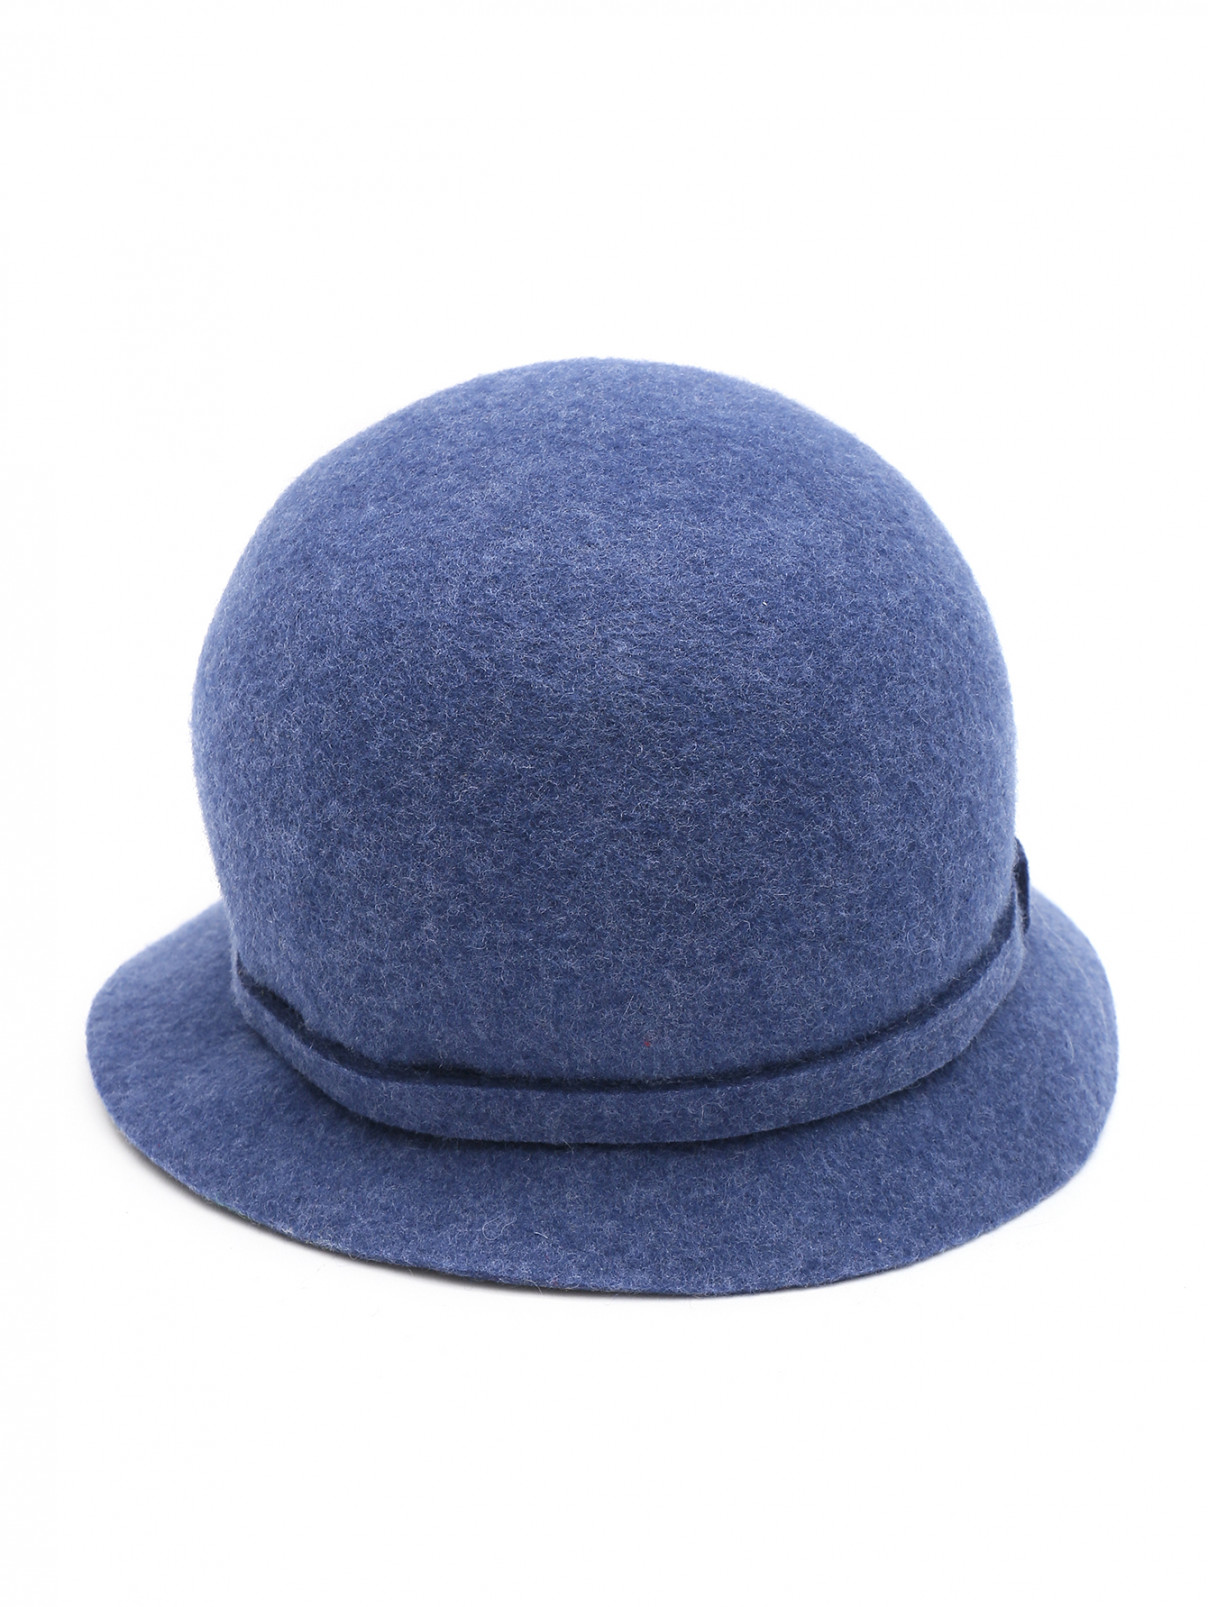 Шляпа из фетра MiMiSol  –  Общий вид  – Цвет:  Синий